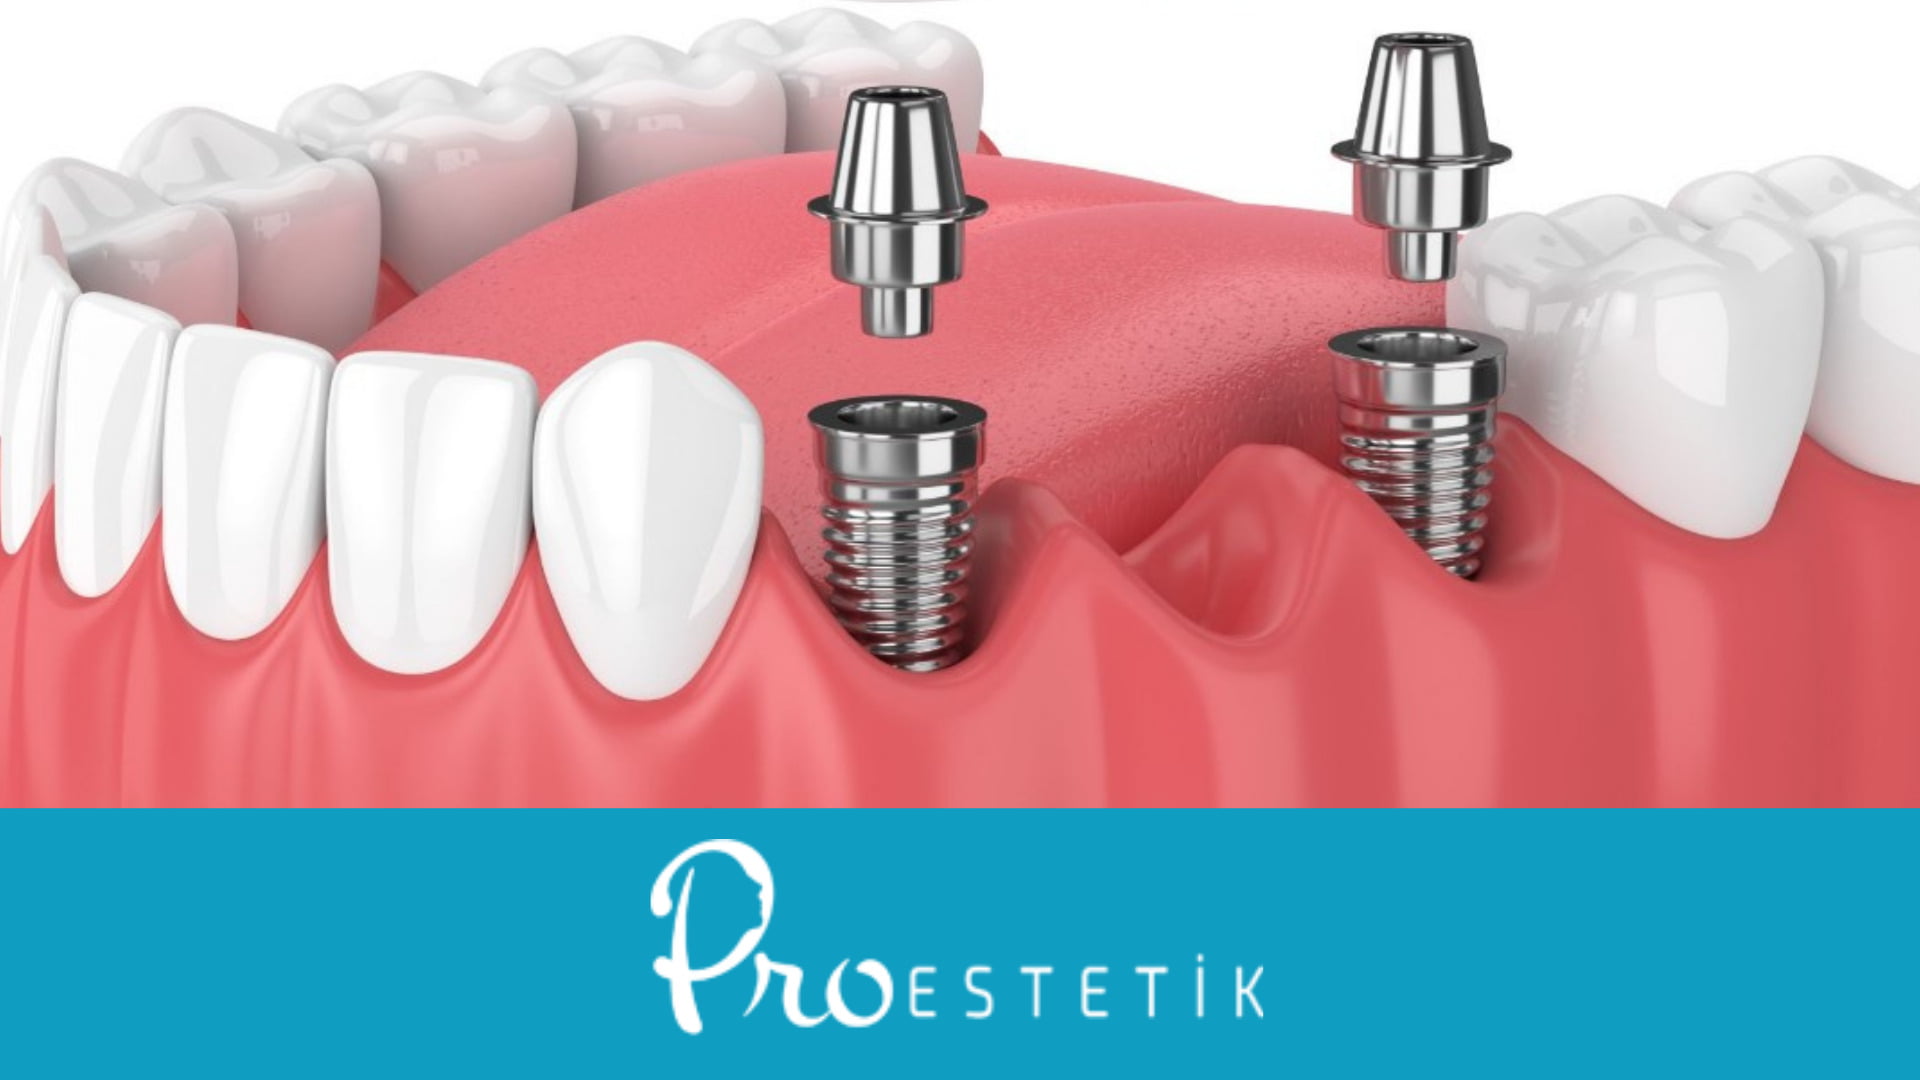 German Dental İmplant Brands – Top 5 Implant Brands